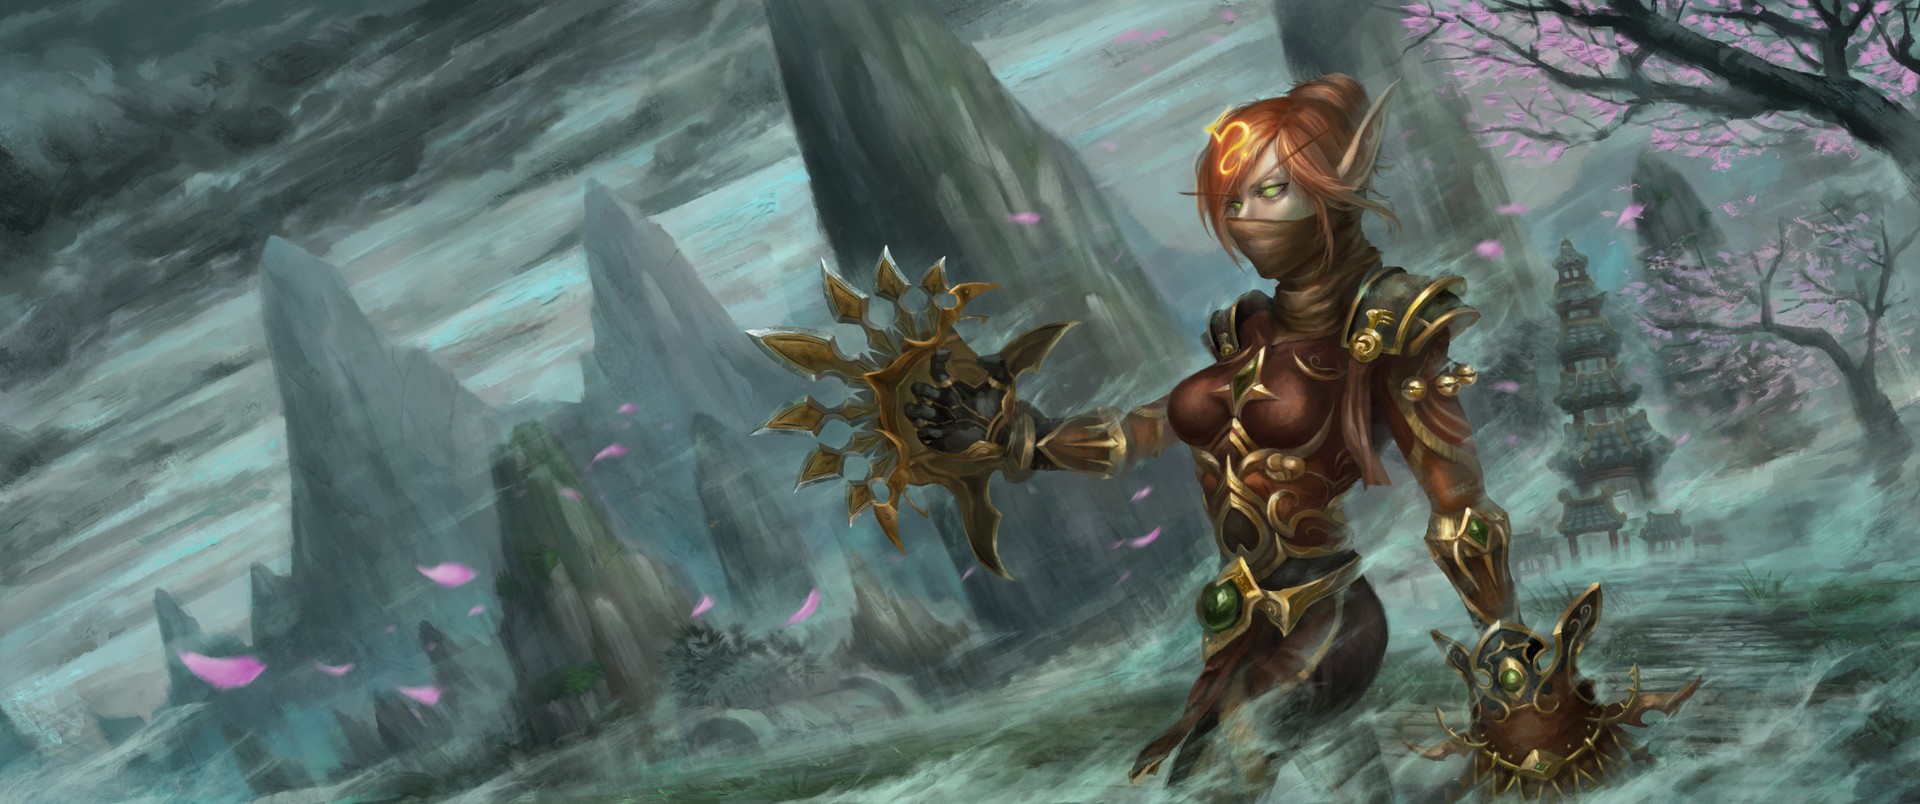 Fantasy Art Blood Elf World Of Warcraft Mists Of Pandaria 1920x804